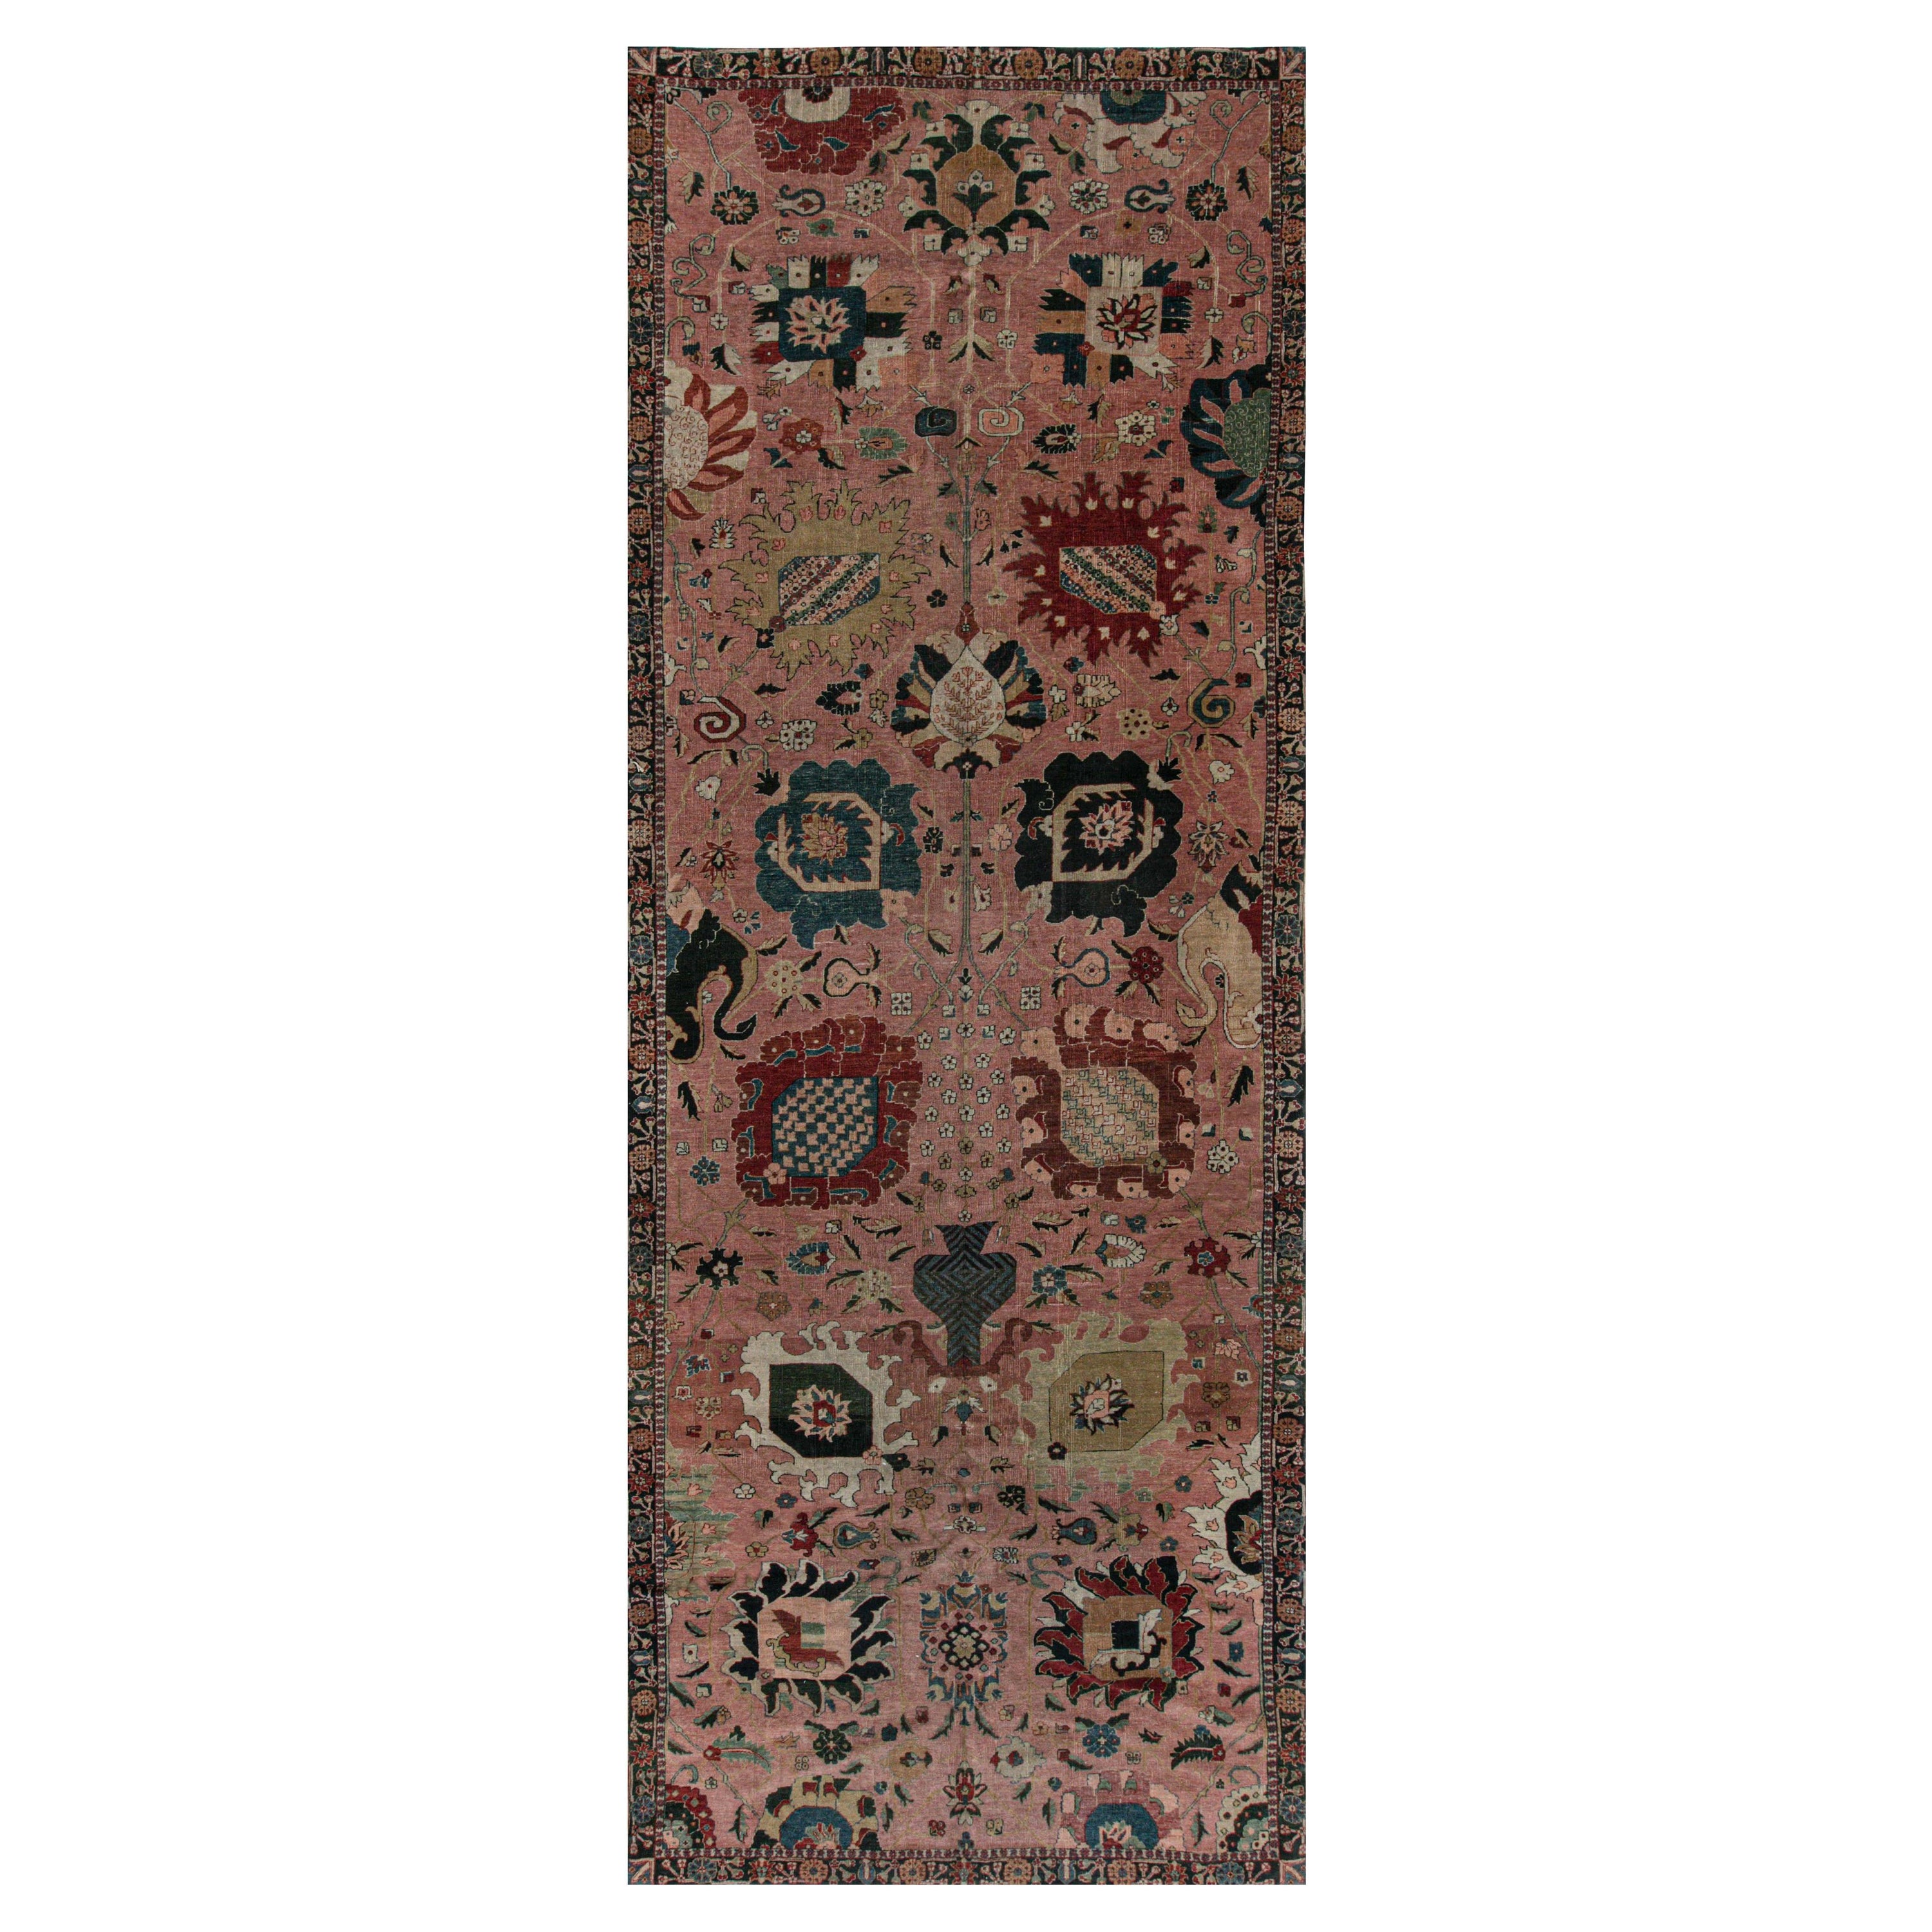 Authentic Persian Tabriz Botanic Carpet For Sale